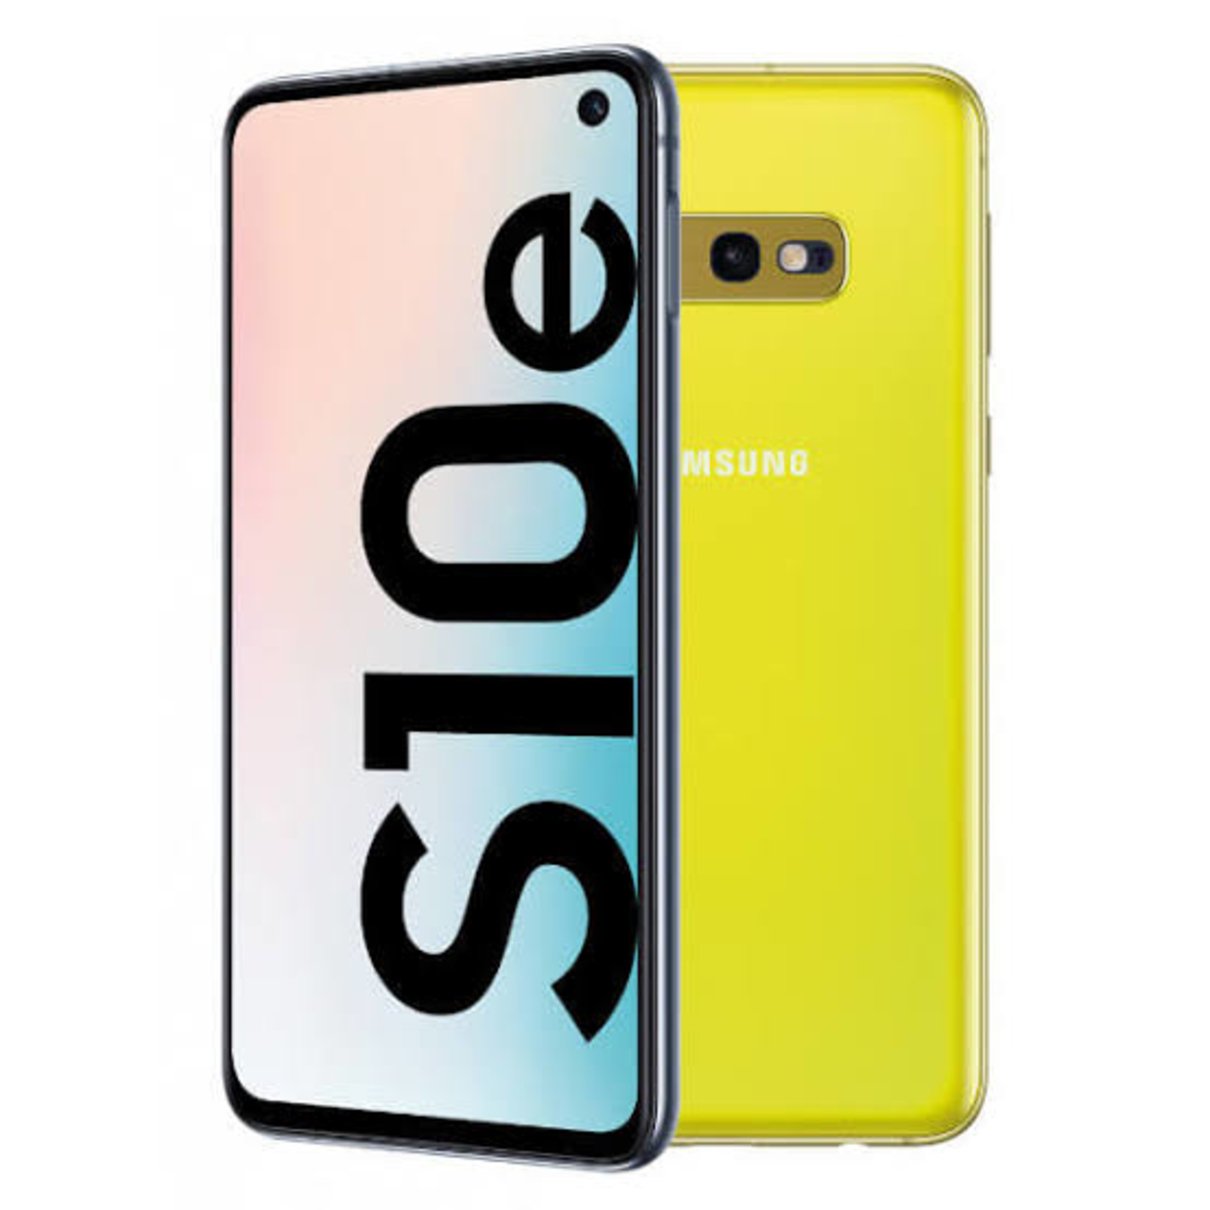 Samsung-Galaxy-S10e